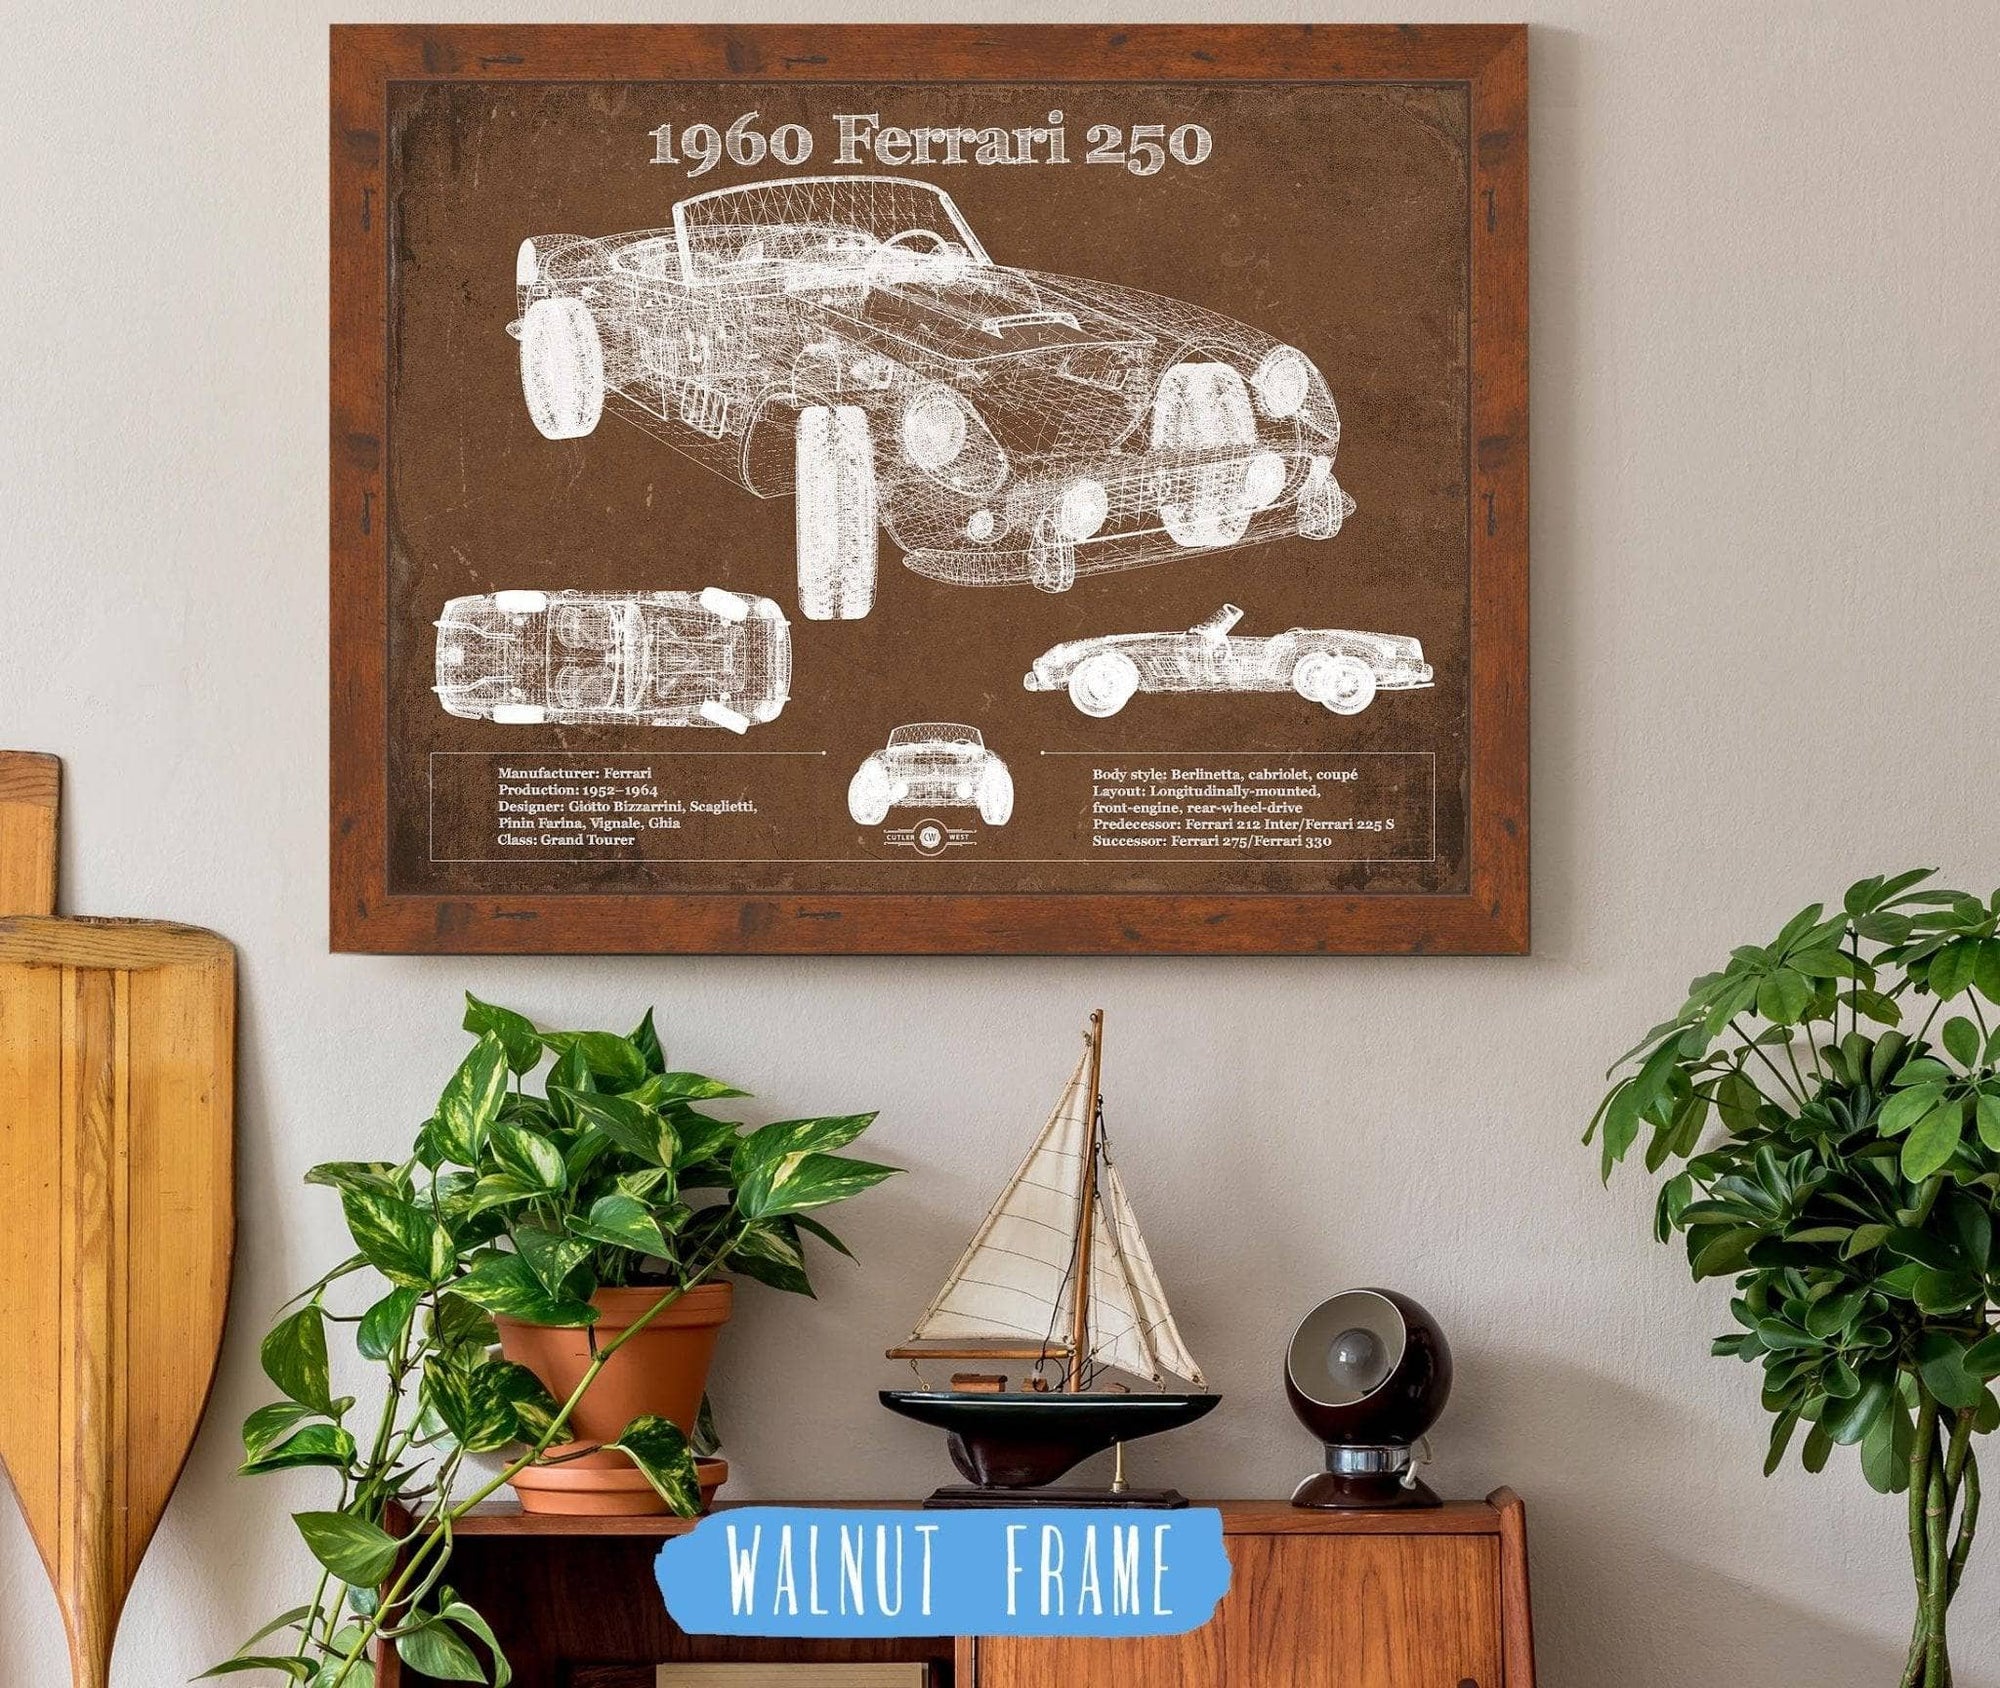 Cutler West Ferrari Collection 14" x 11" / Walnut Frame 1960 Ferrari 250 Vintage Blueprint Auto Print 933350034_10096